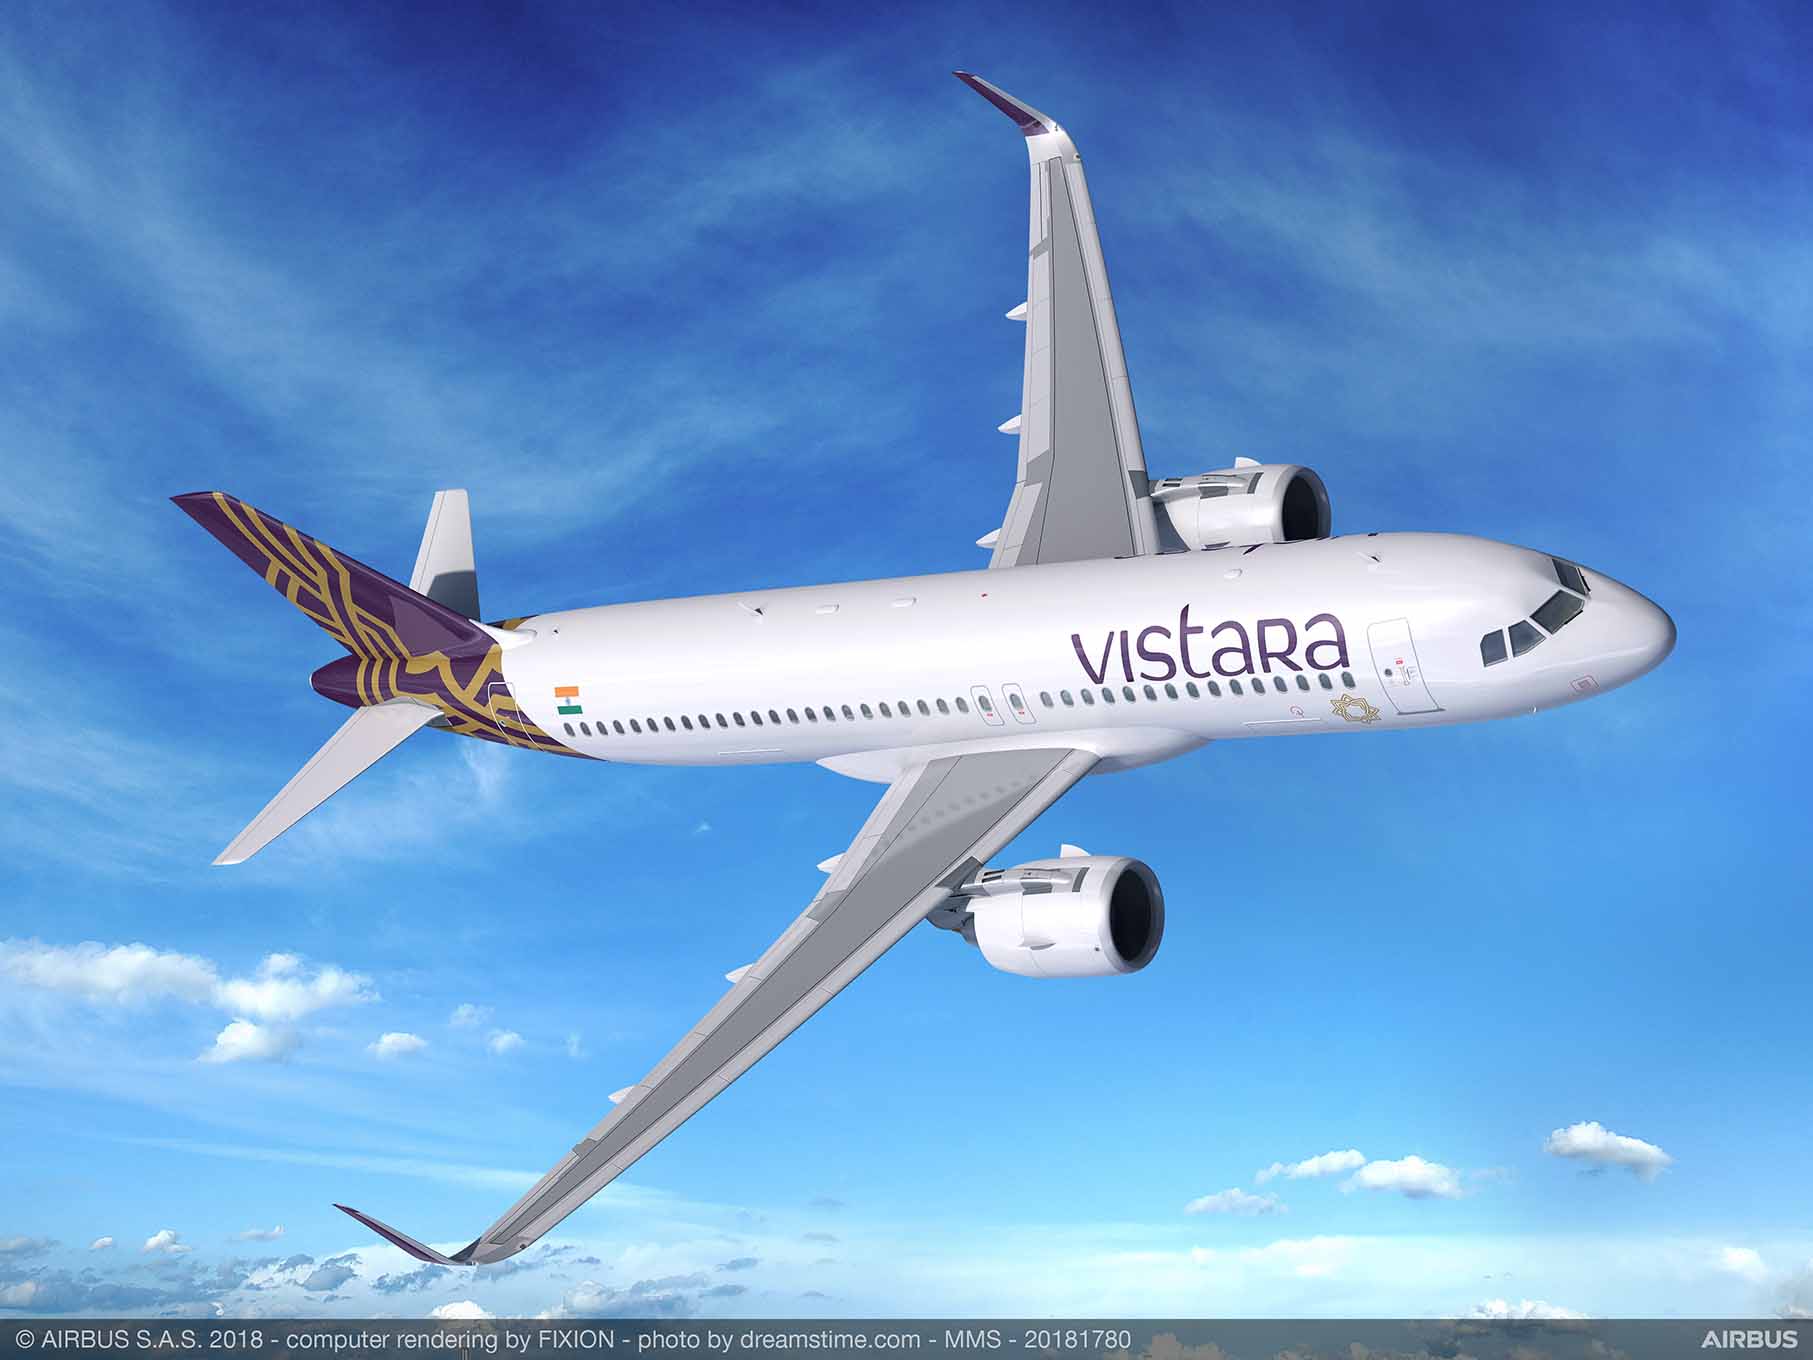 Codeshare agreement created between Vistara and Singapore Airlines, Silkair